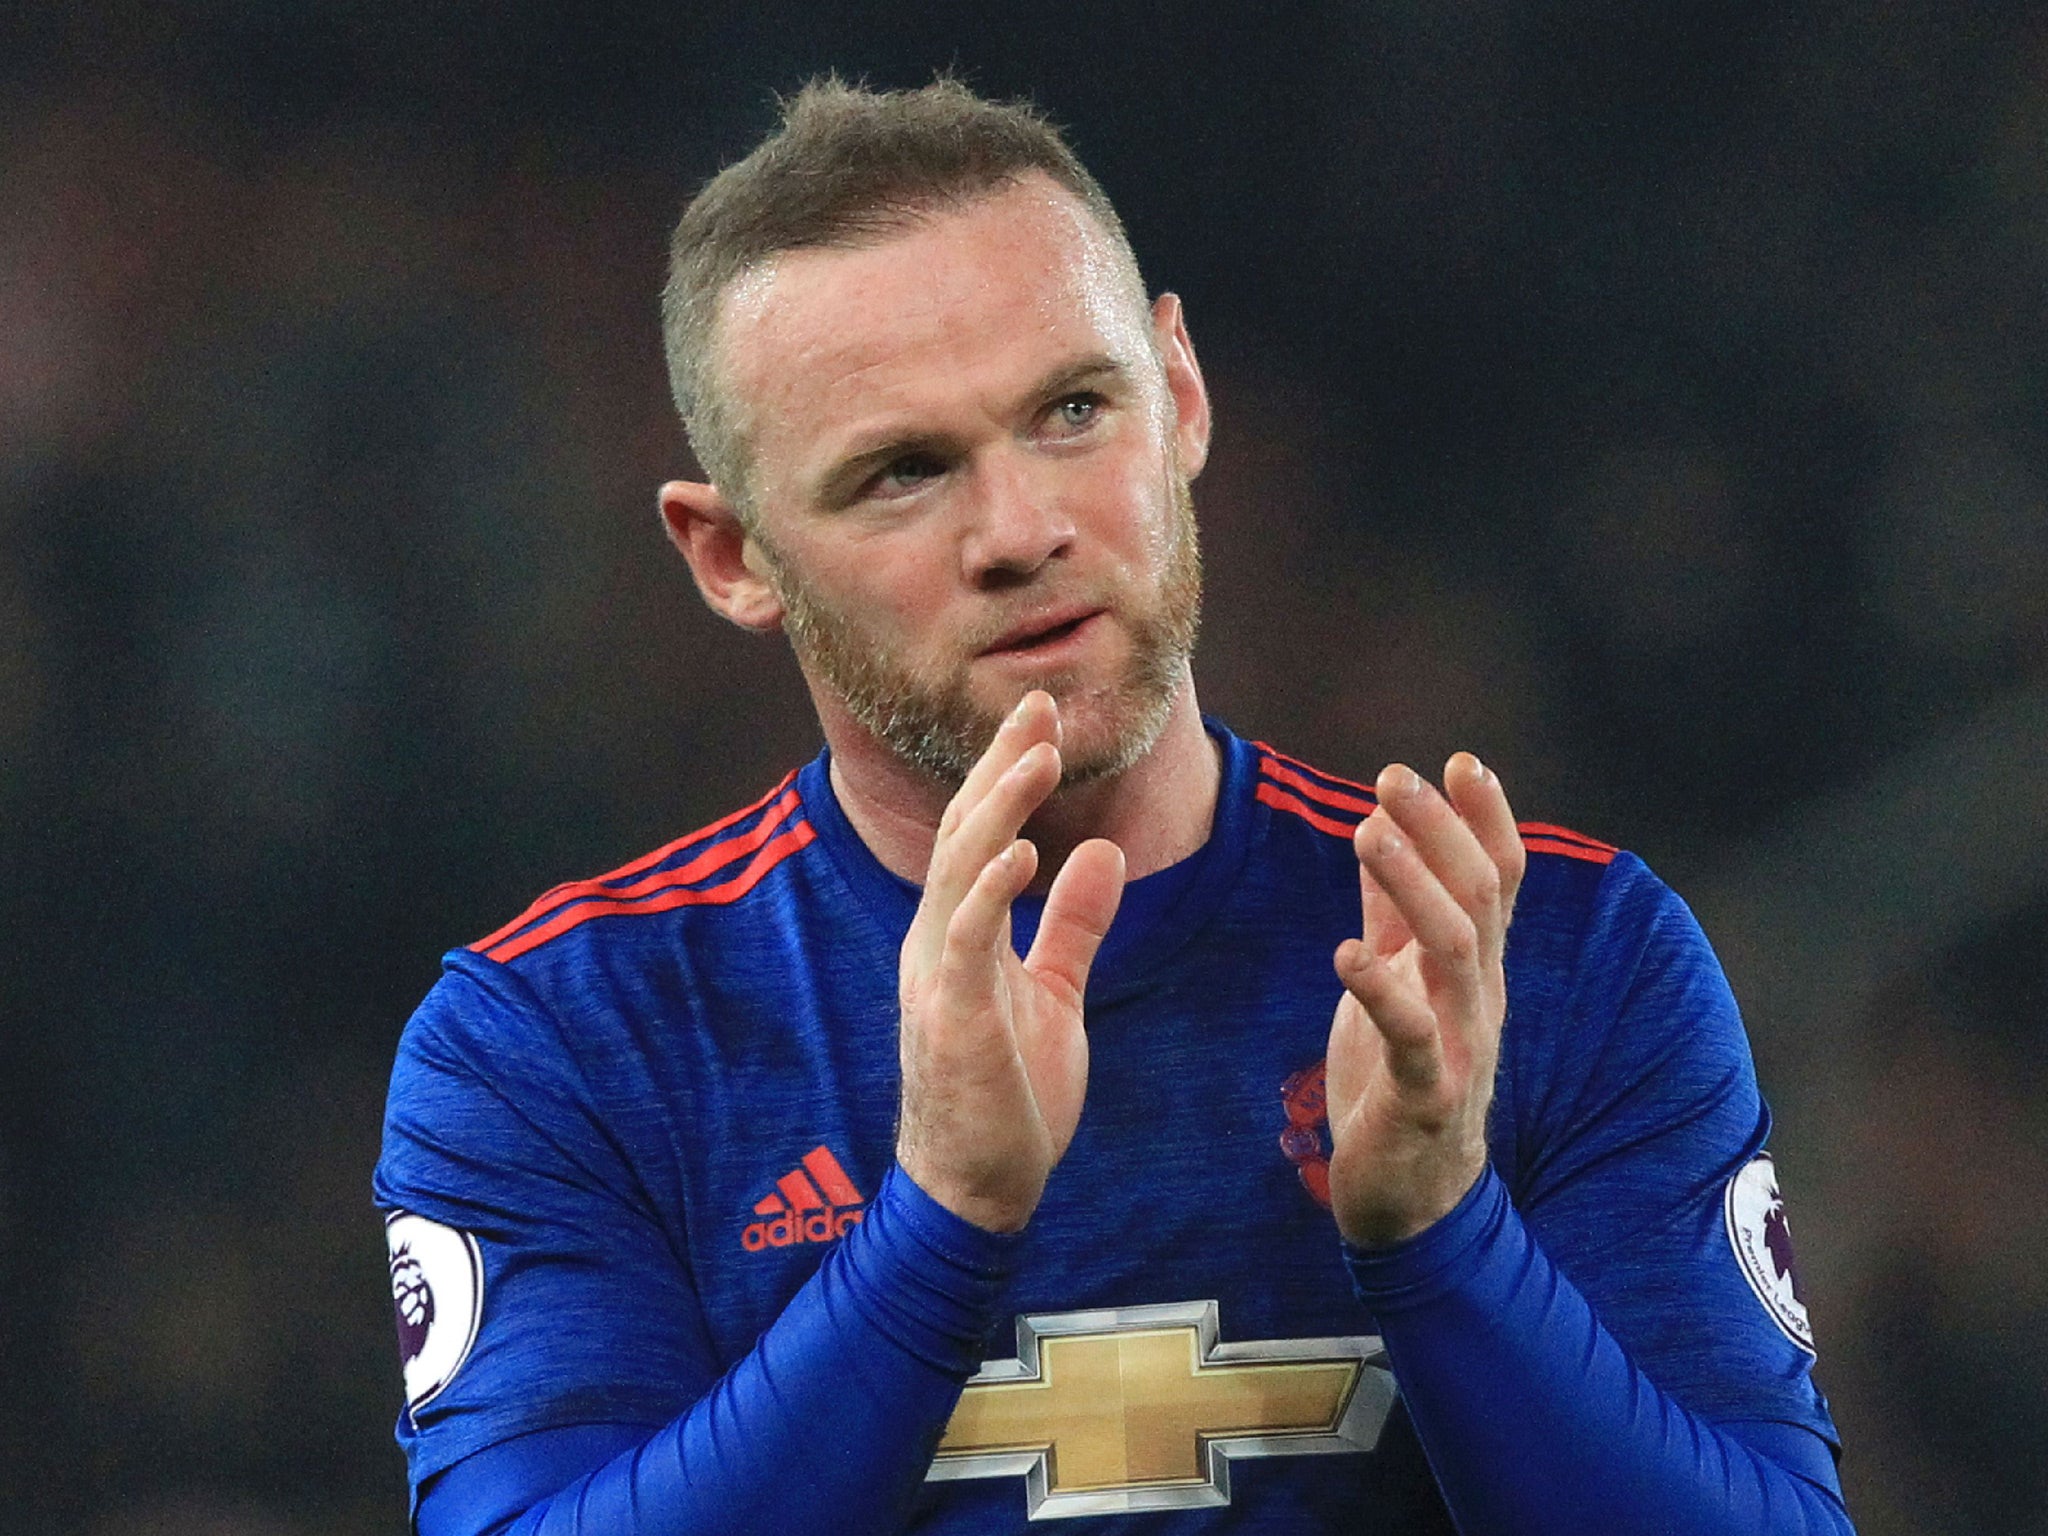 Wayne Rooney endured a difficult season at Manchester United last term